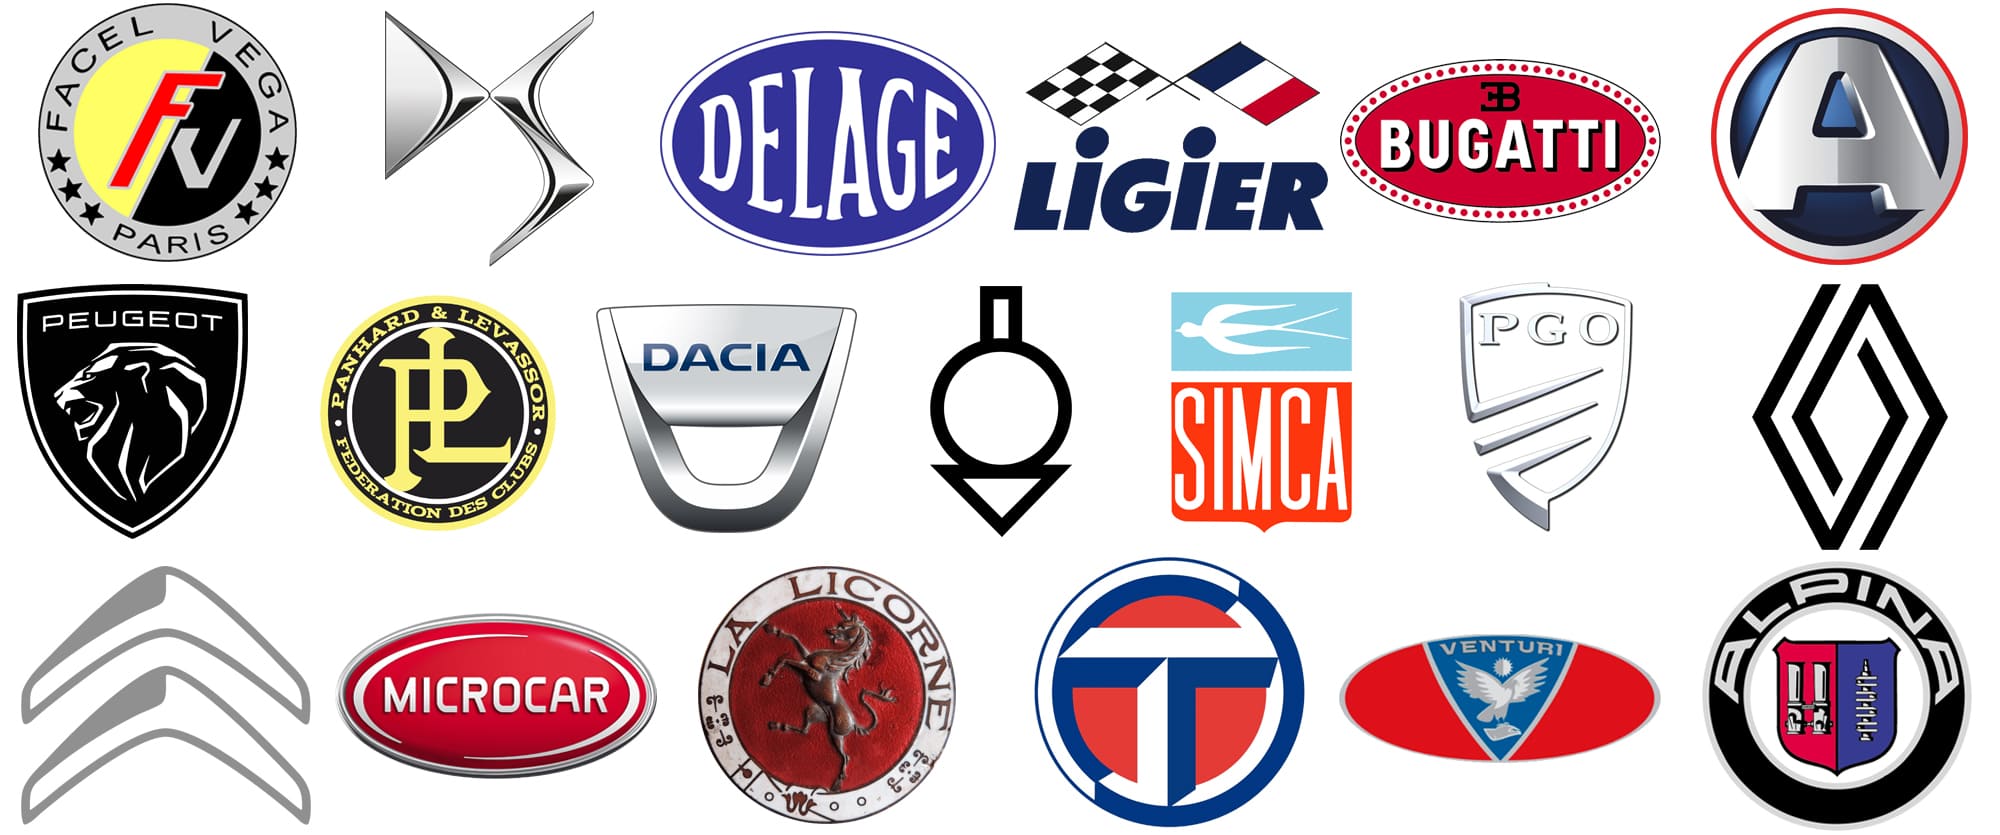 European Car Brand Logos